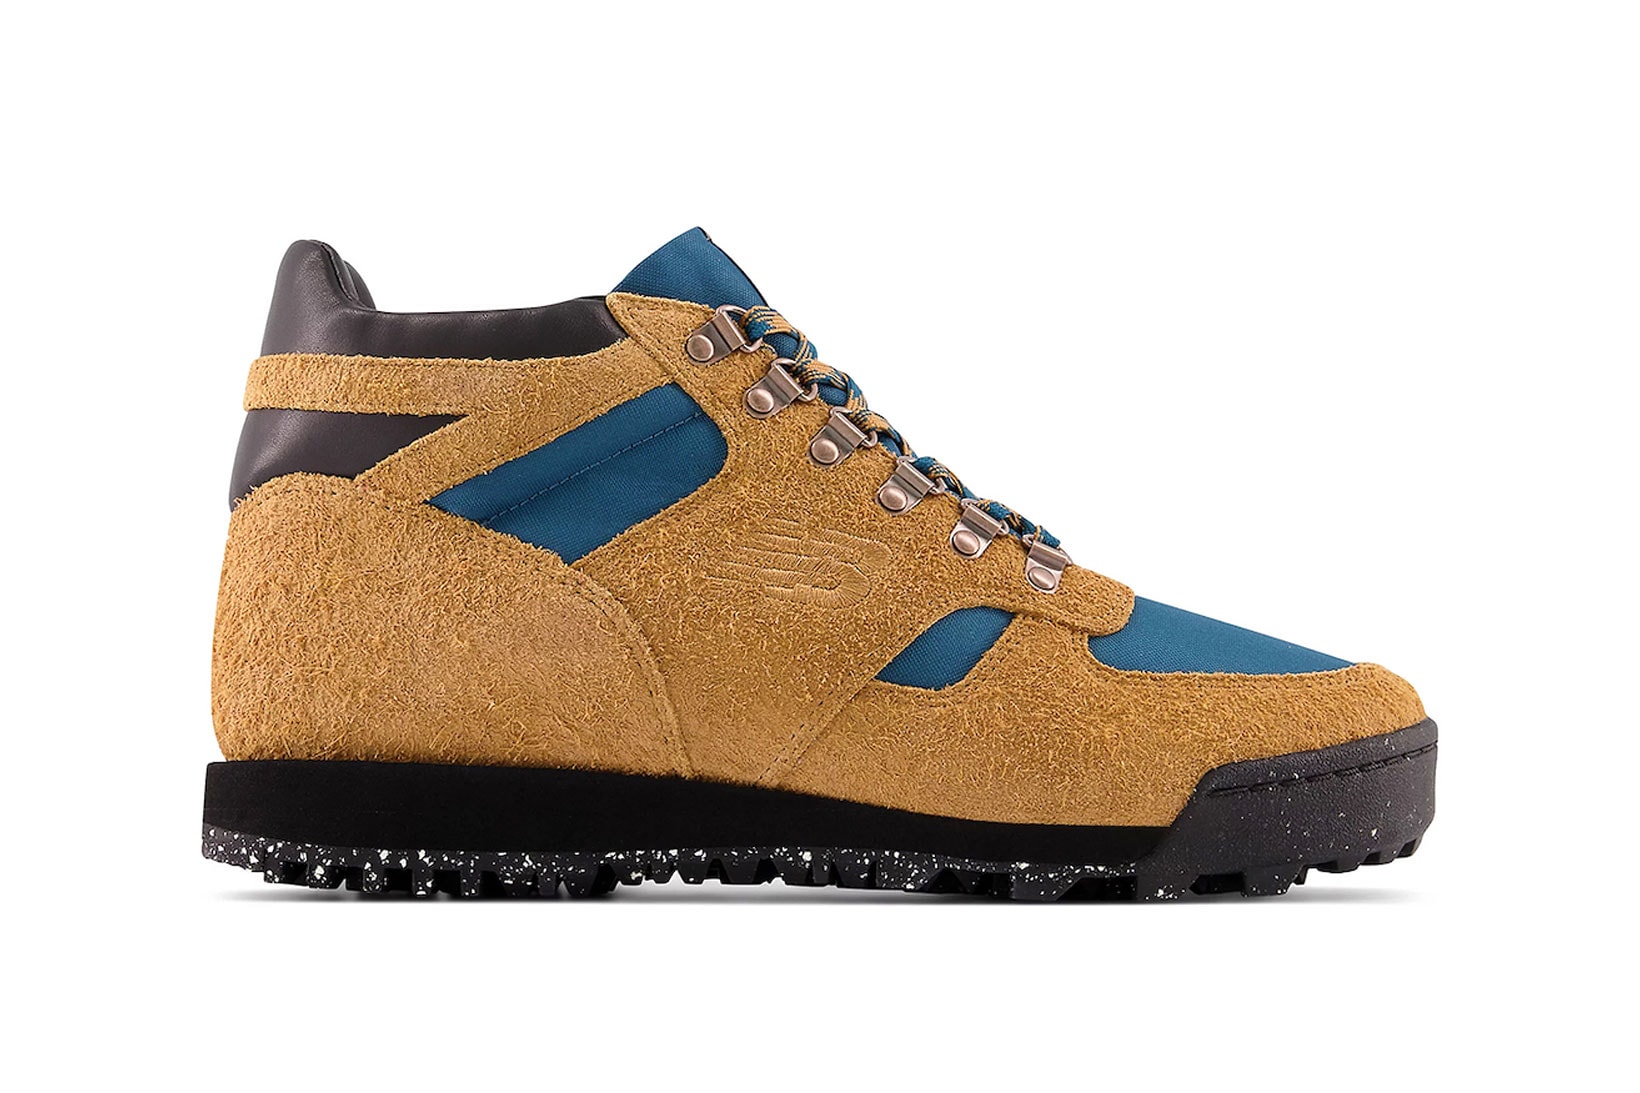 New Balance Rainier Hiking Boots Raincloud Tan Teal Release Price Info